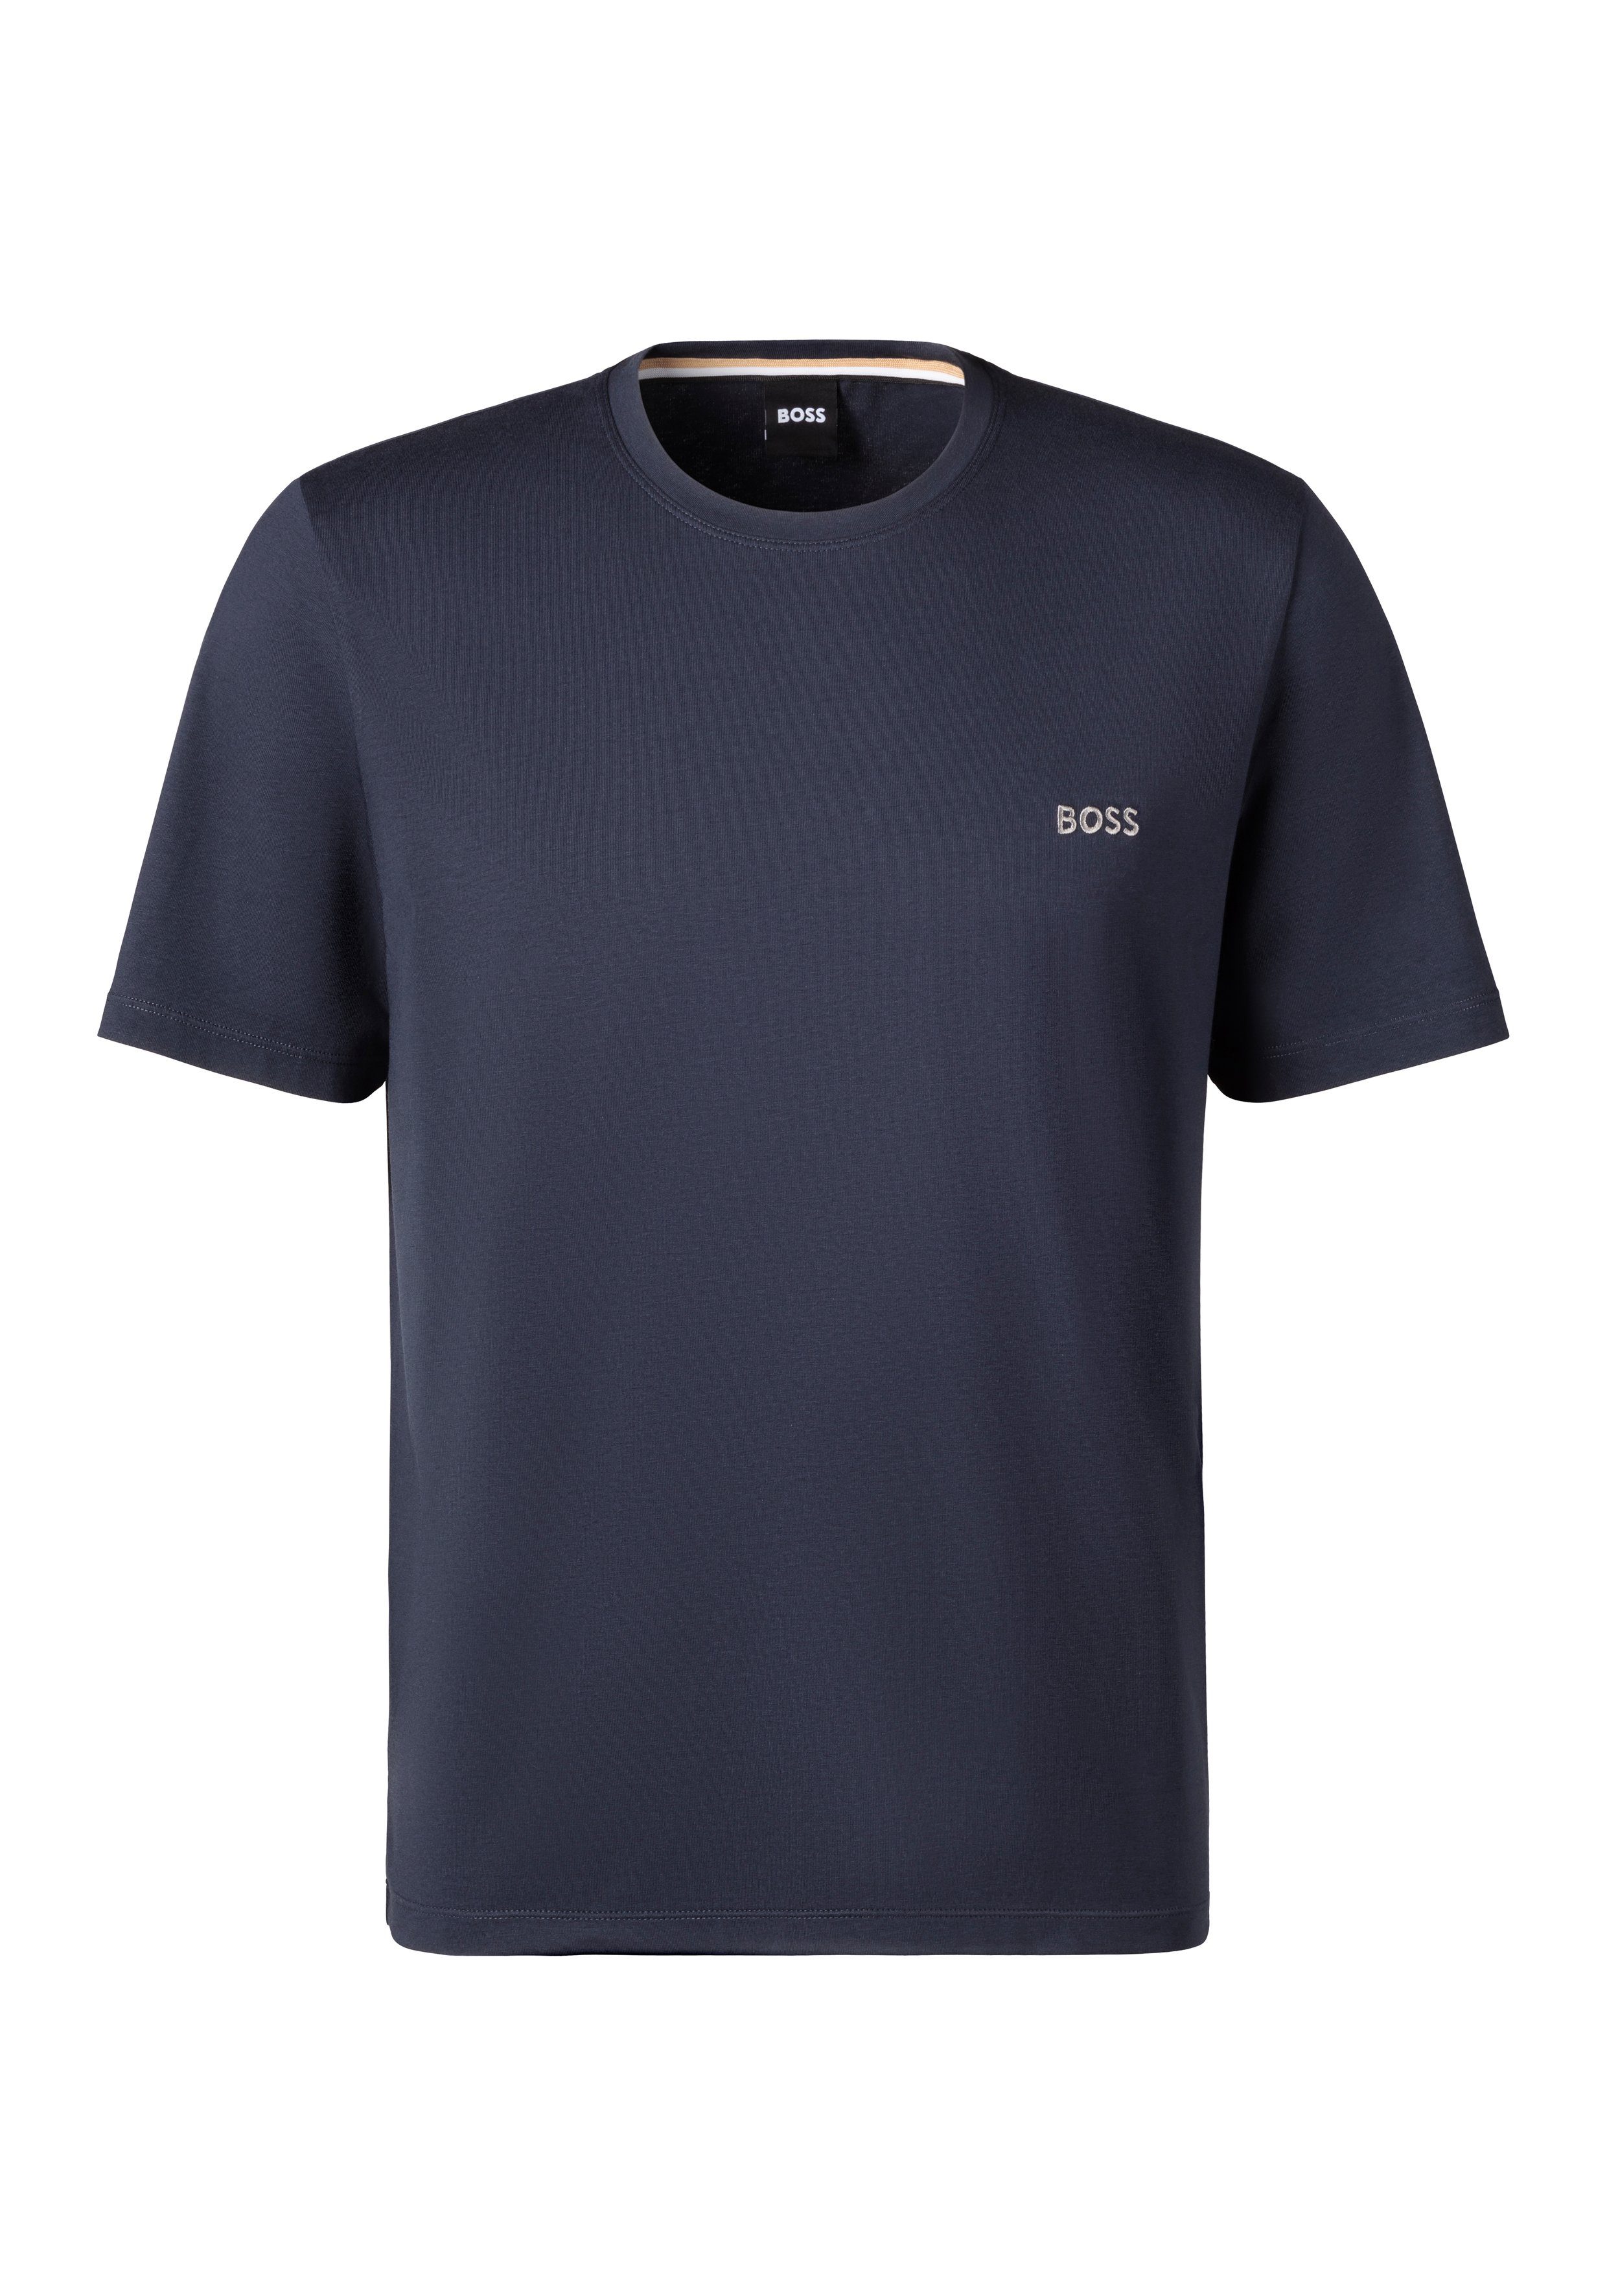 BOSS mit Brustlogo navy T-Shirt